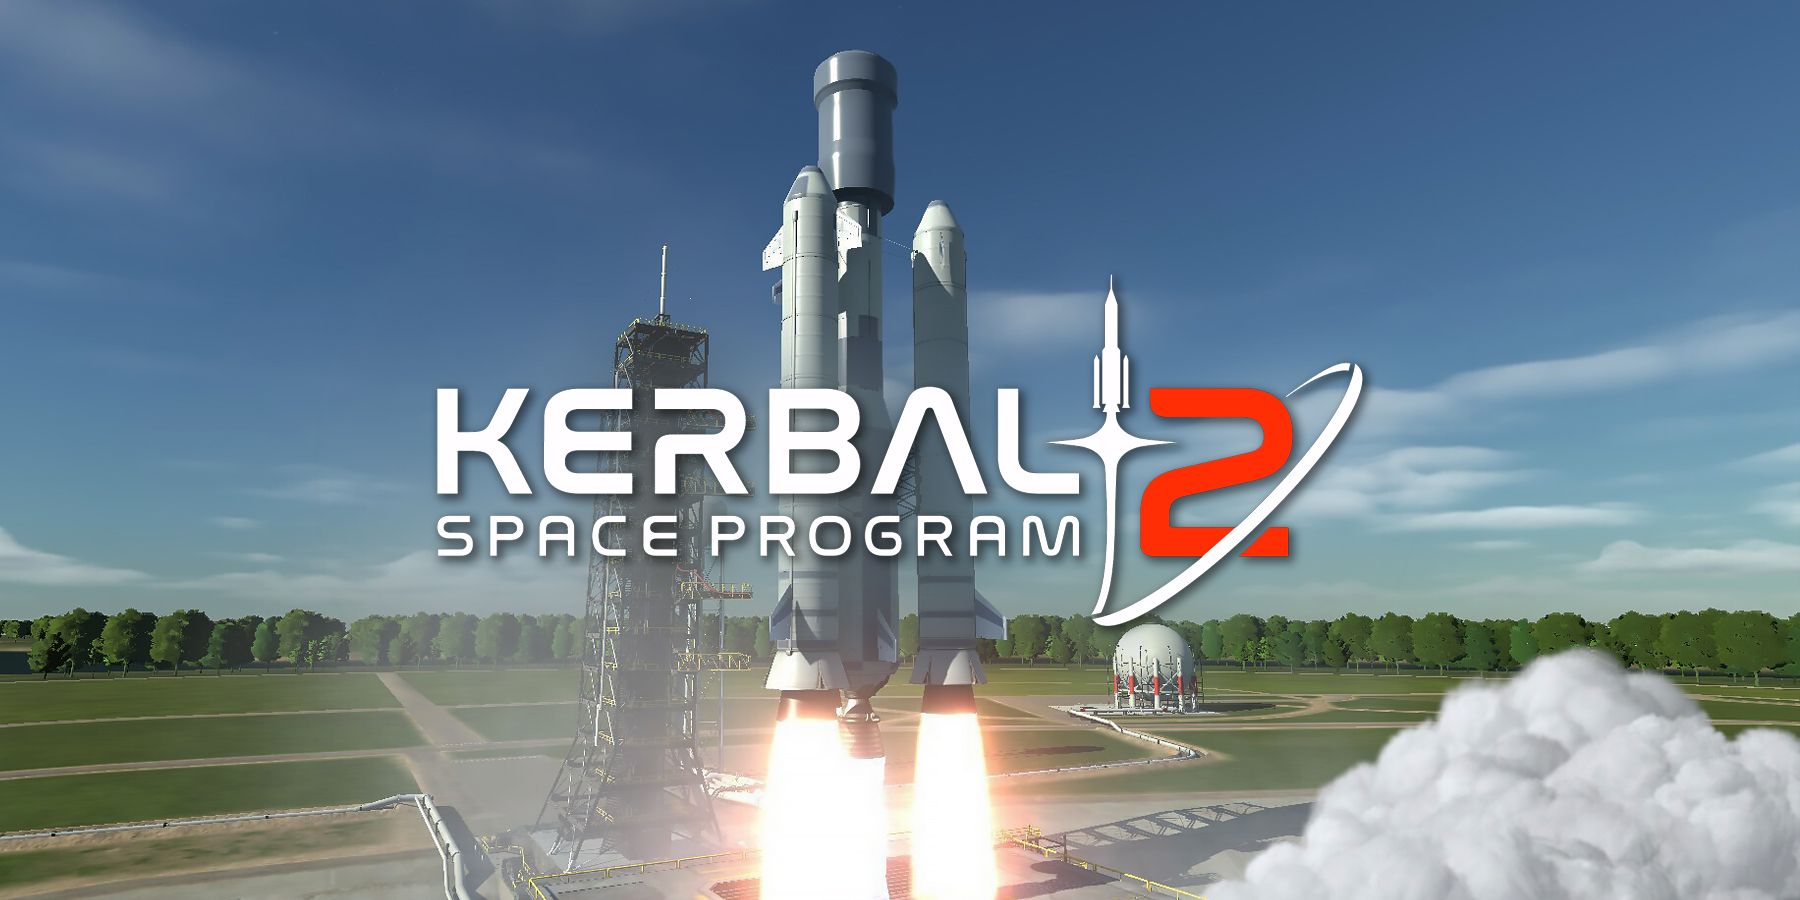 Kerbal Space Program 2 Logo over Rocket Launch screenshot.